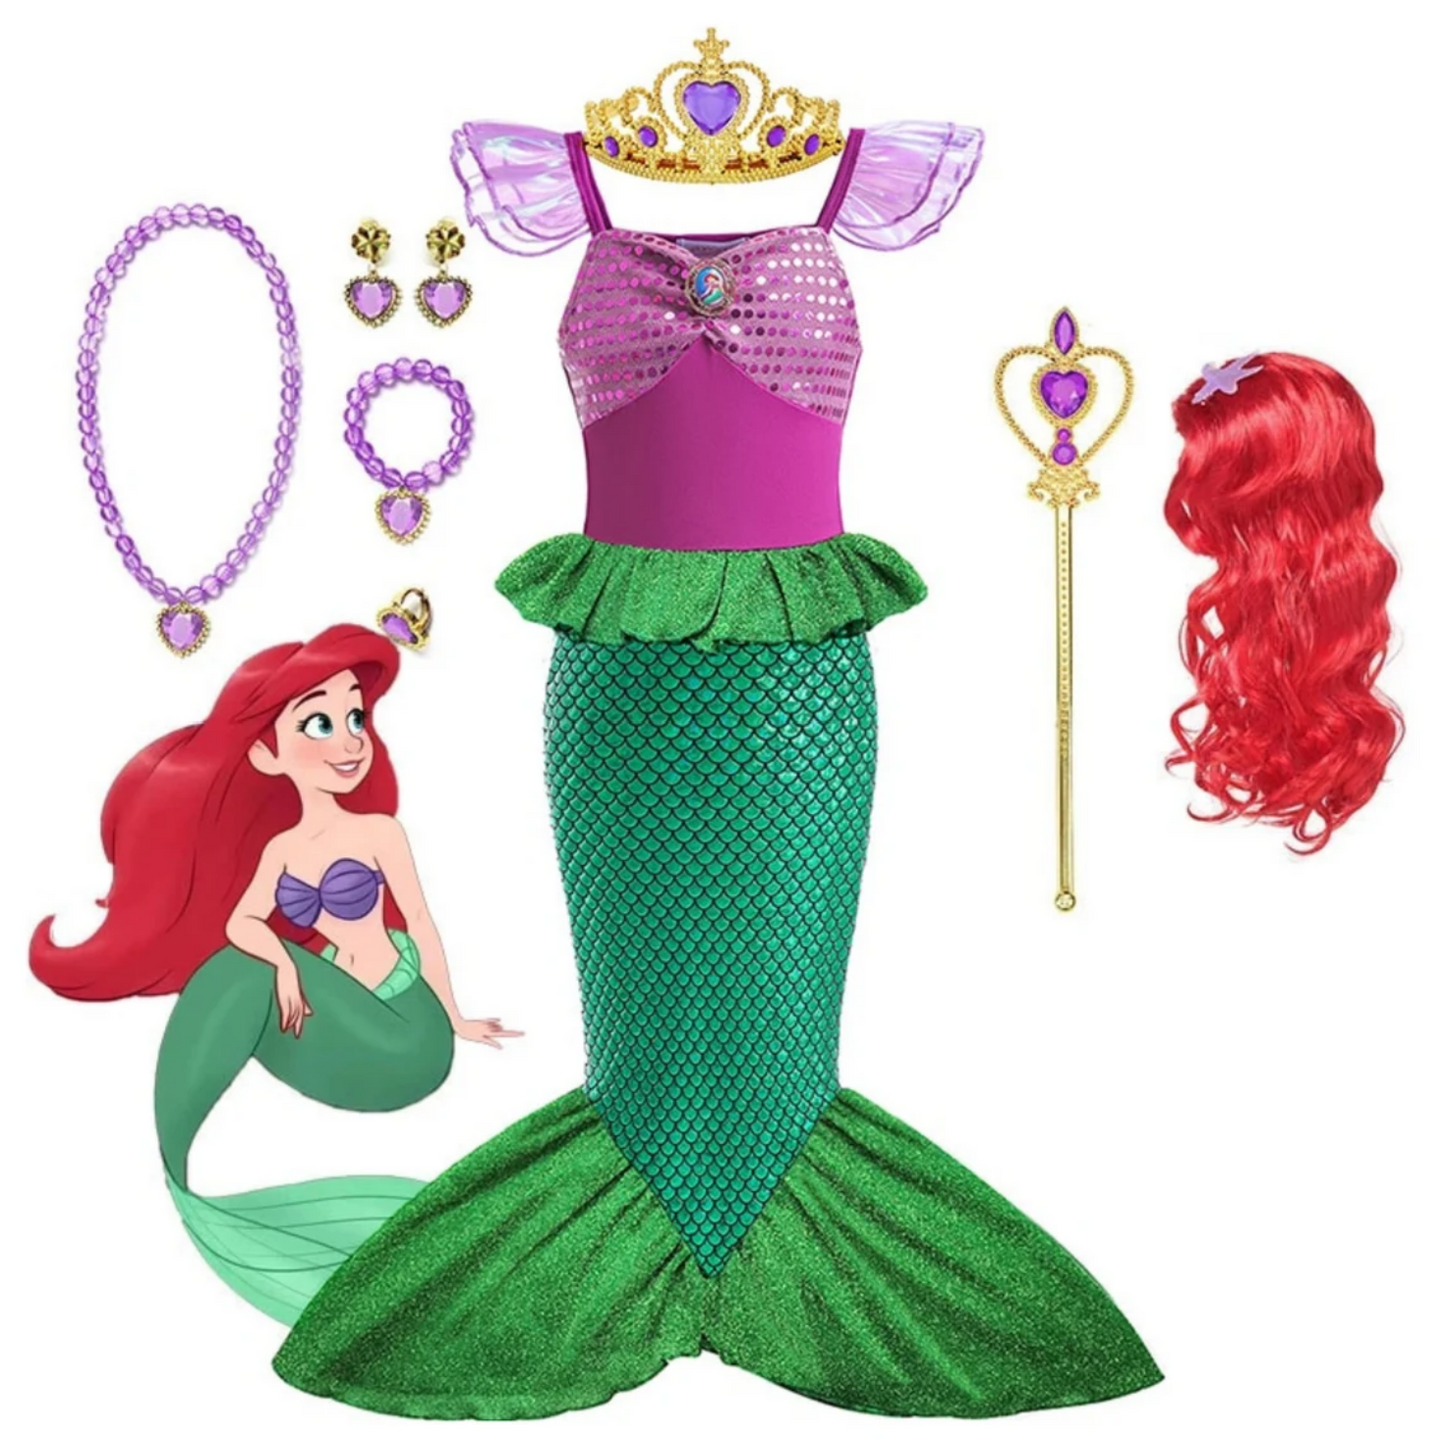 Ariel Mermaid Cosplay Costume outfit